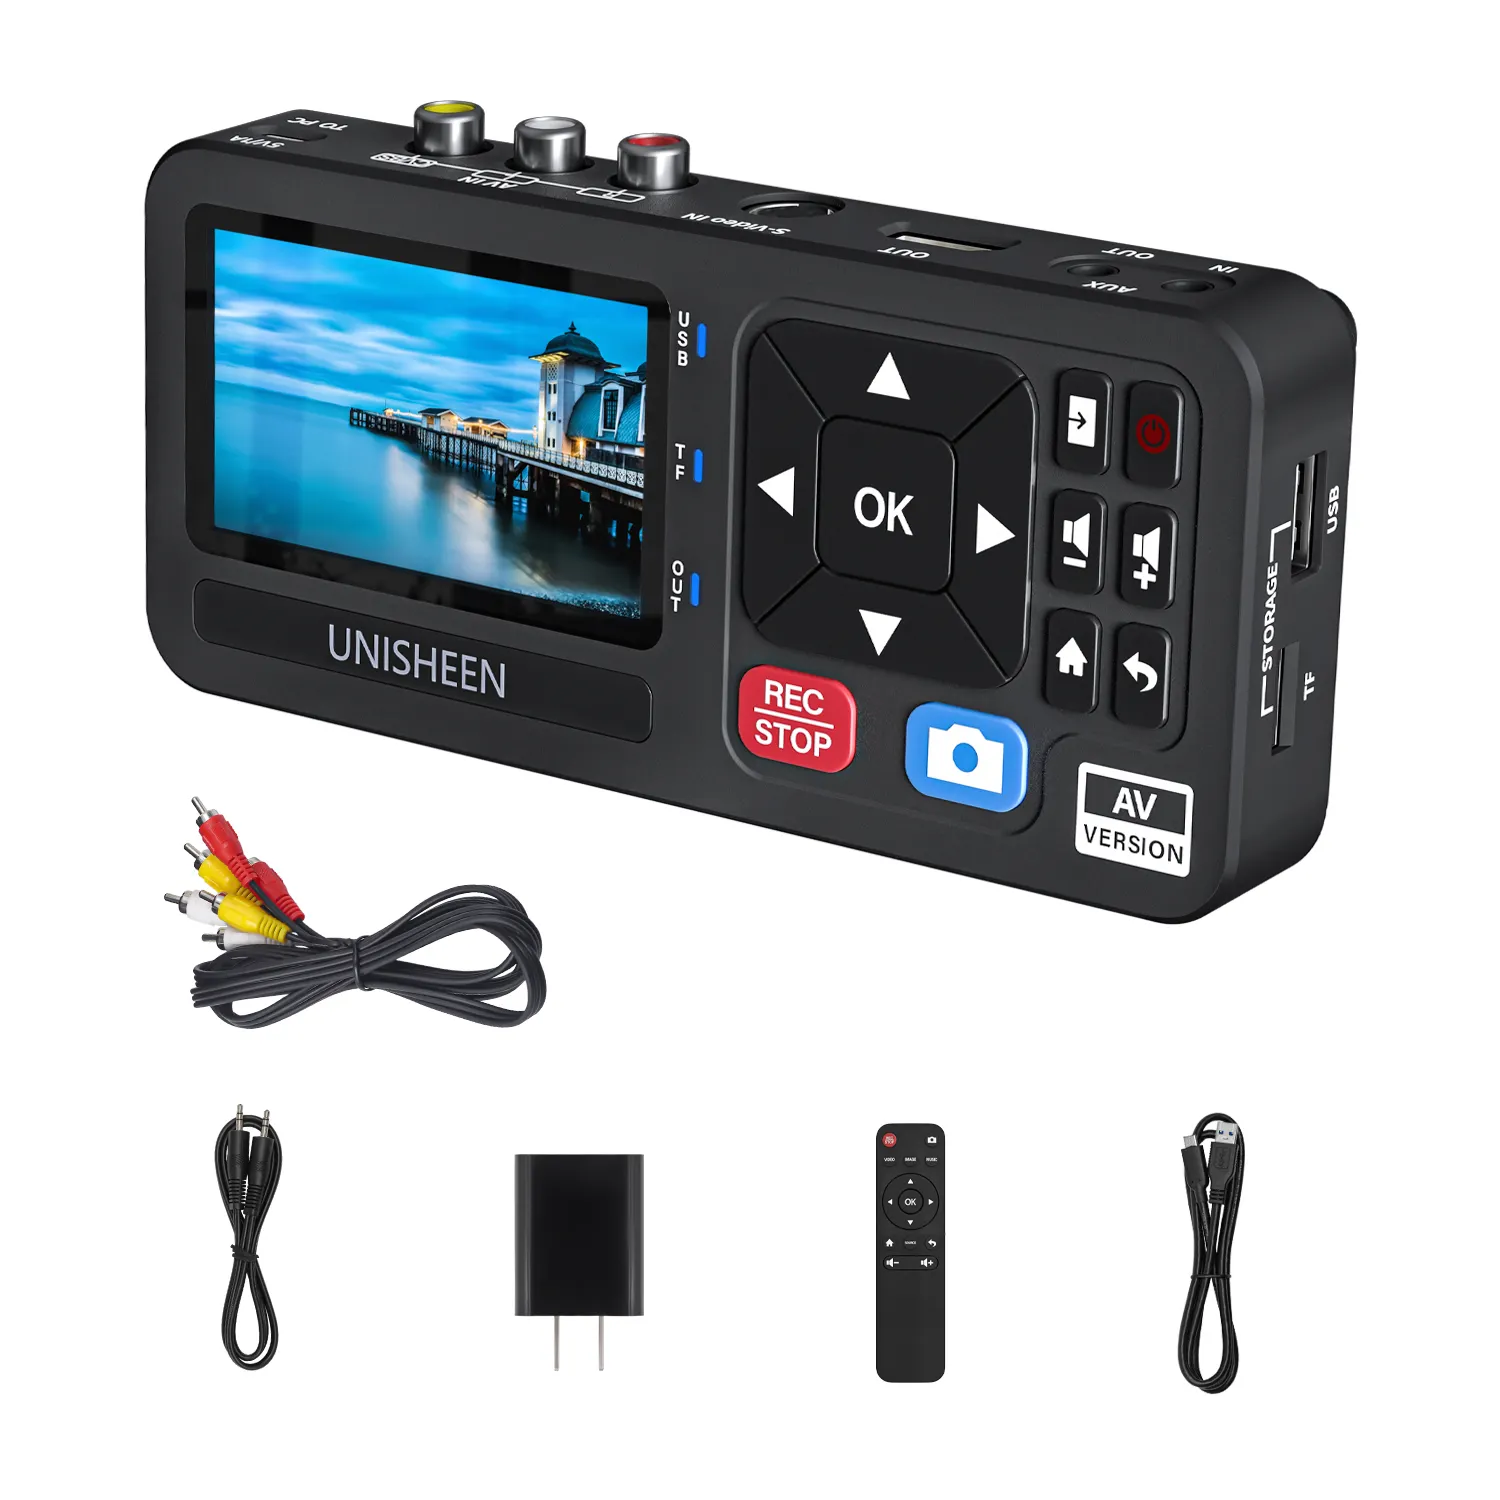 UNISHEEN konverter Video Audio portabel MP4, dengan penangkap Remote kontrol CVBS/s-video Retro perekam Hi8 Gaming